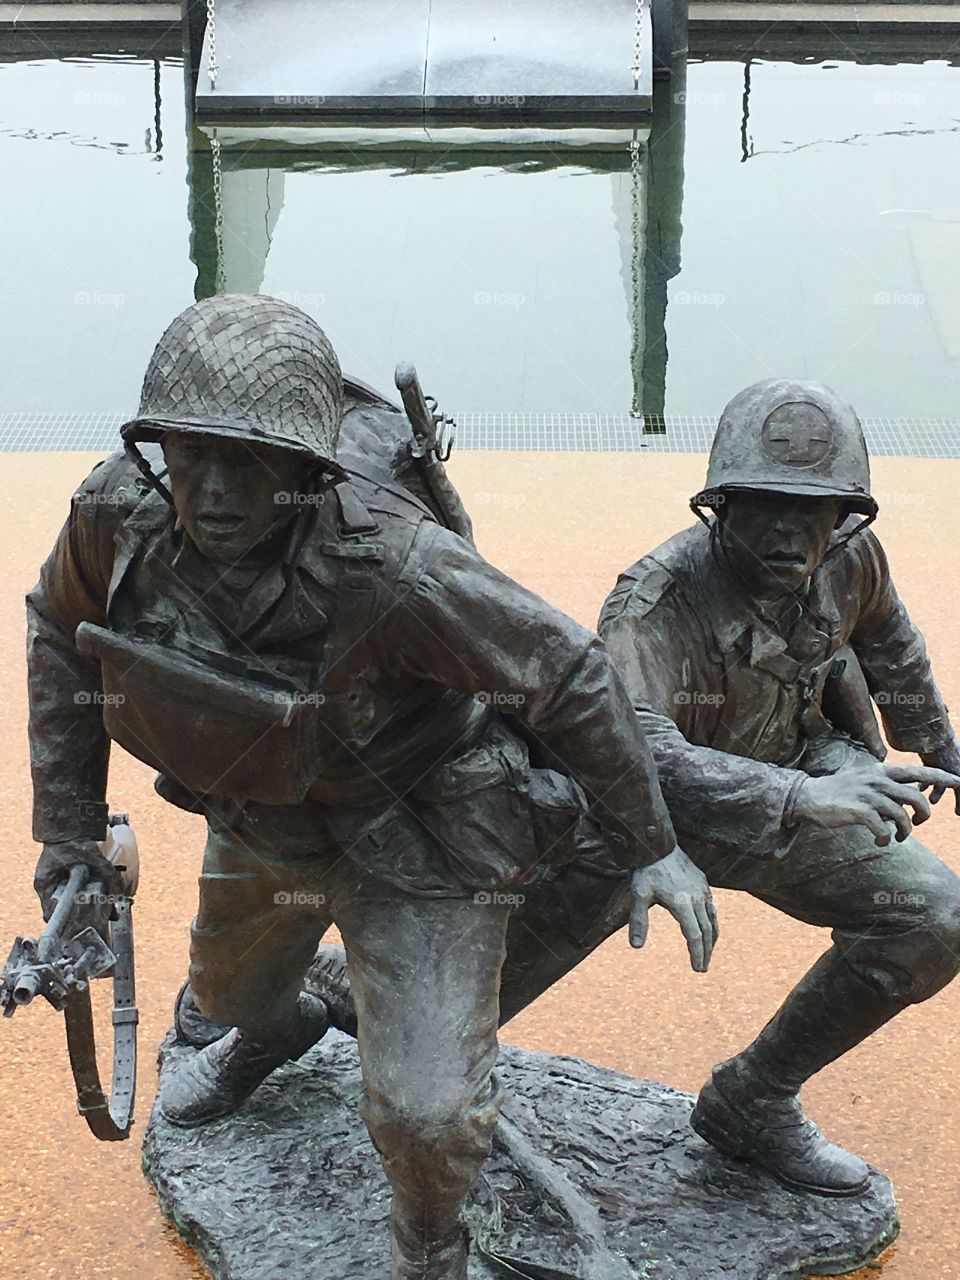 National D-Day Memorial - Bedford, VA